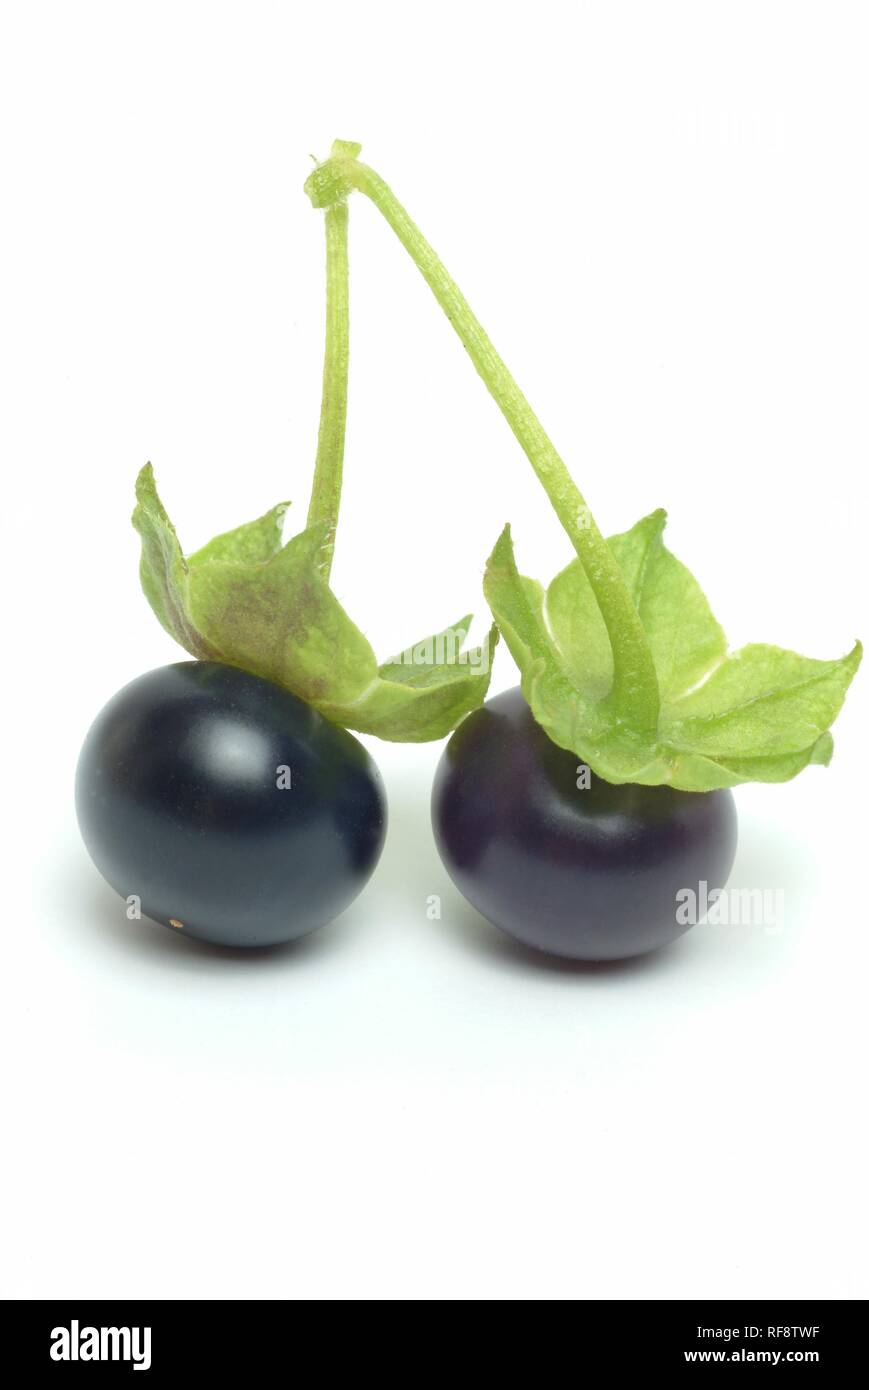 Schleichende False Holly oder Jaltomato (Jaltomata procumbens), schwarz Kirschgroße Tomatensorte Stockfoto